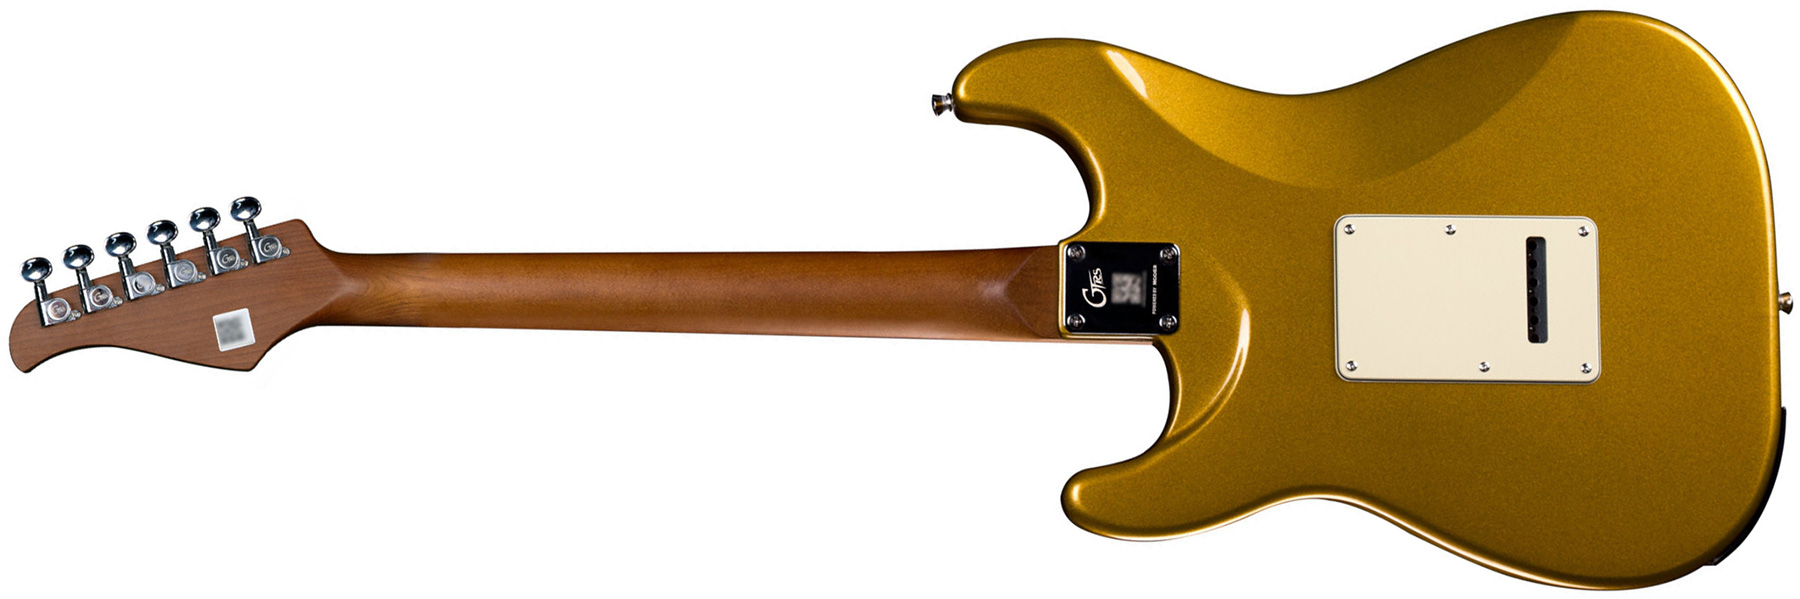 Mooer Gtrs S800 Hss Trem Rw - Gold - Modeling guitar - Variation 1